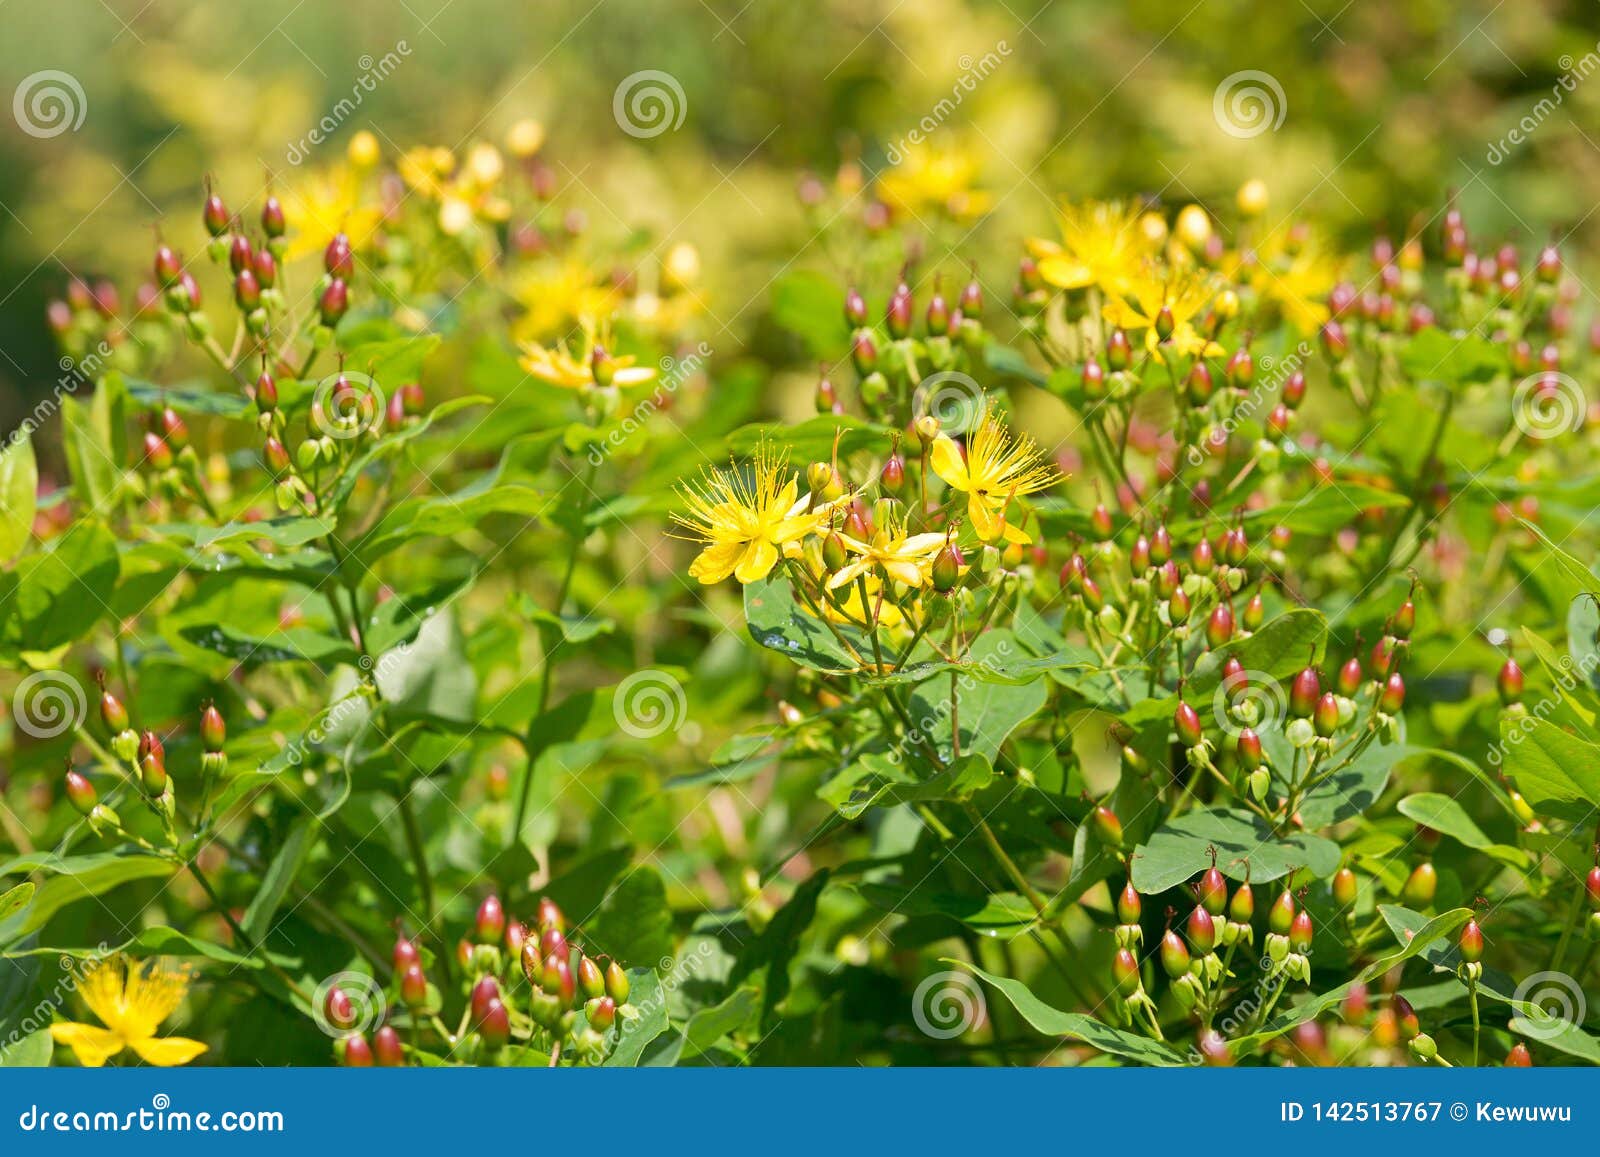 yellow flowers of tutsan, also called shrubby st. johnÃ¢â¬â¢s wort, sweet amber